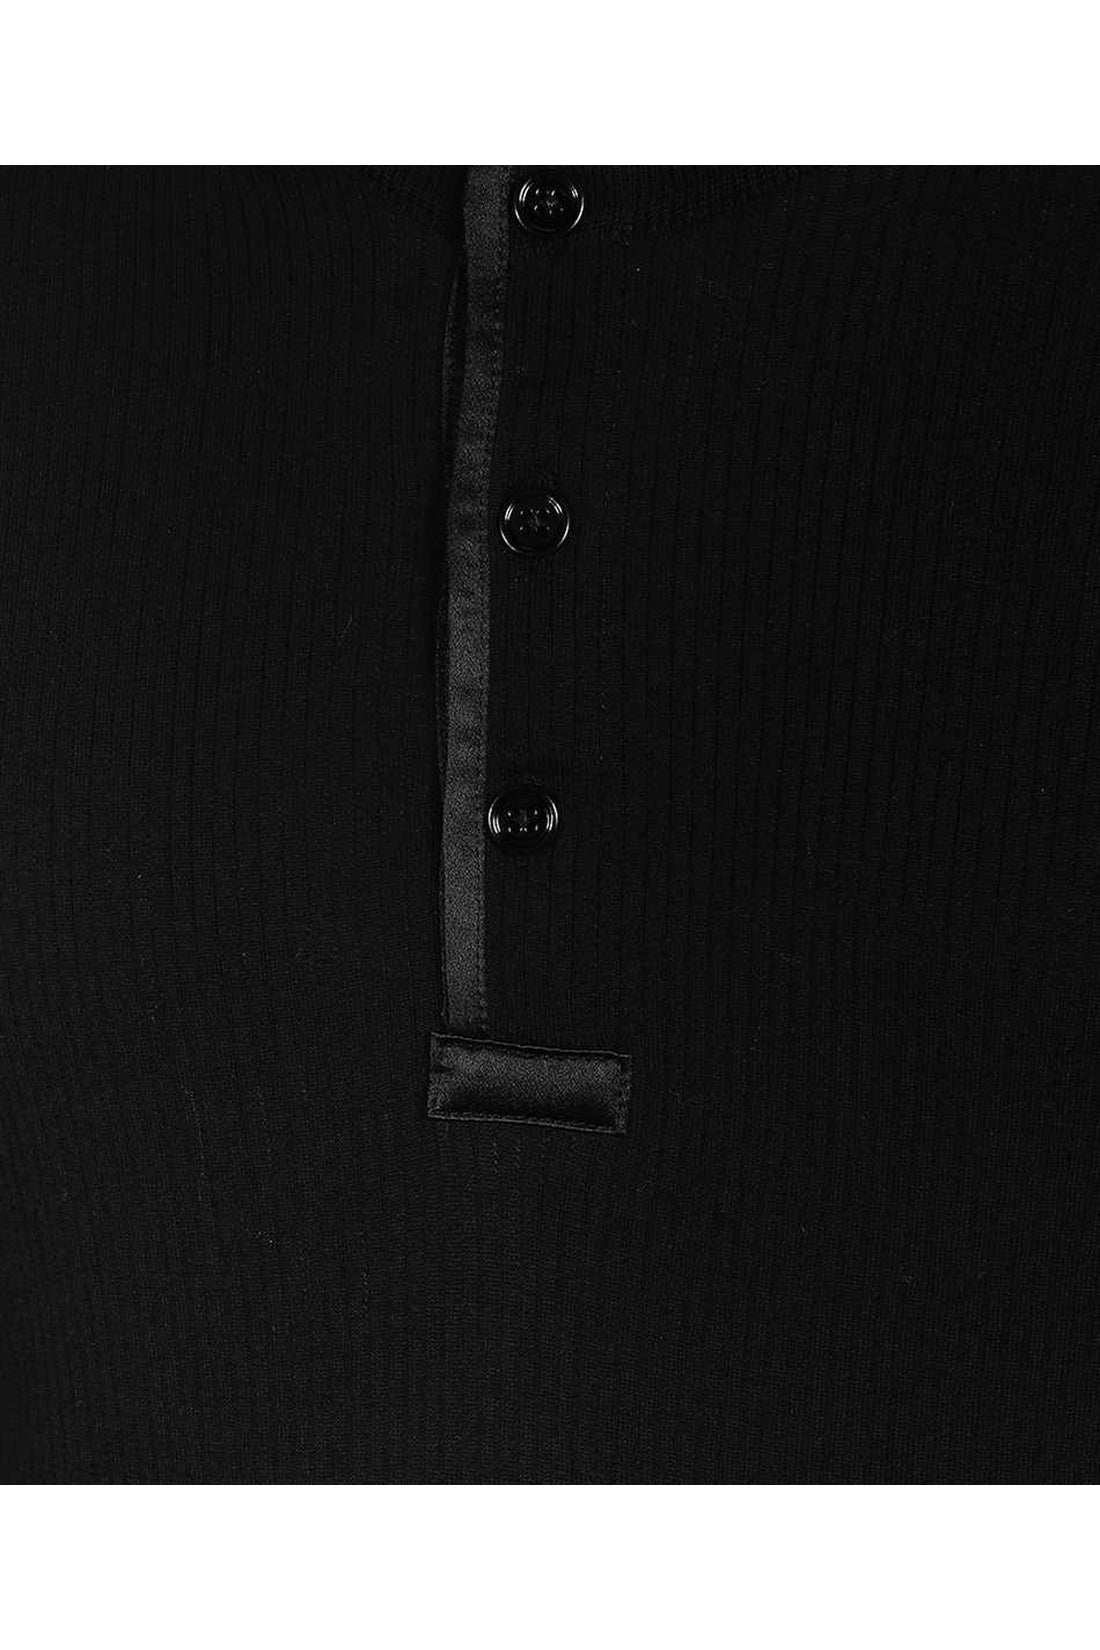 Tom Ford-OUTLET-SALE-Cotton-silk blend crew-neck sweater-ARCHIVIST